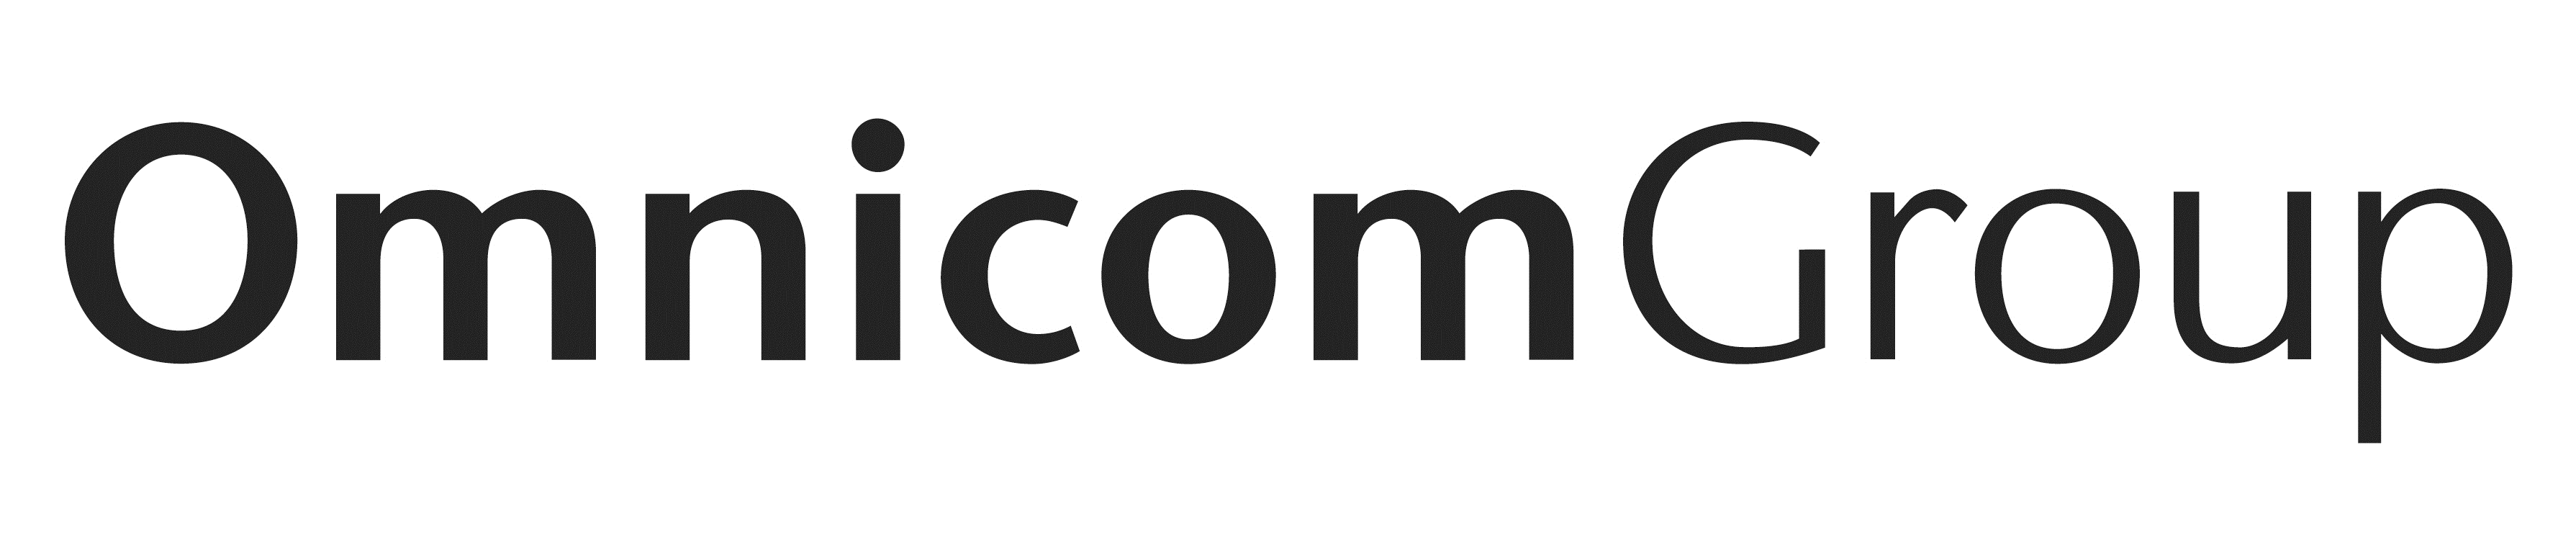 Carat Logo - Carat Logo | LOGOSURFER.COM